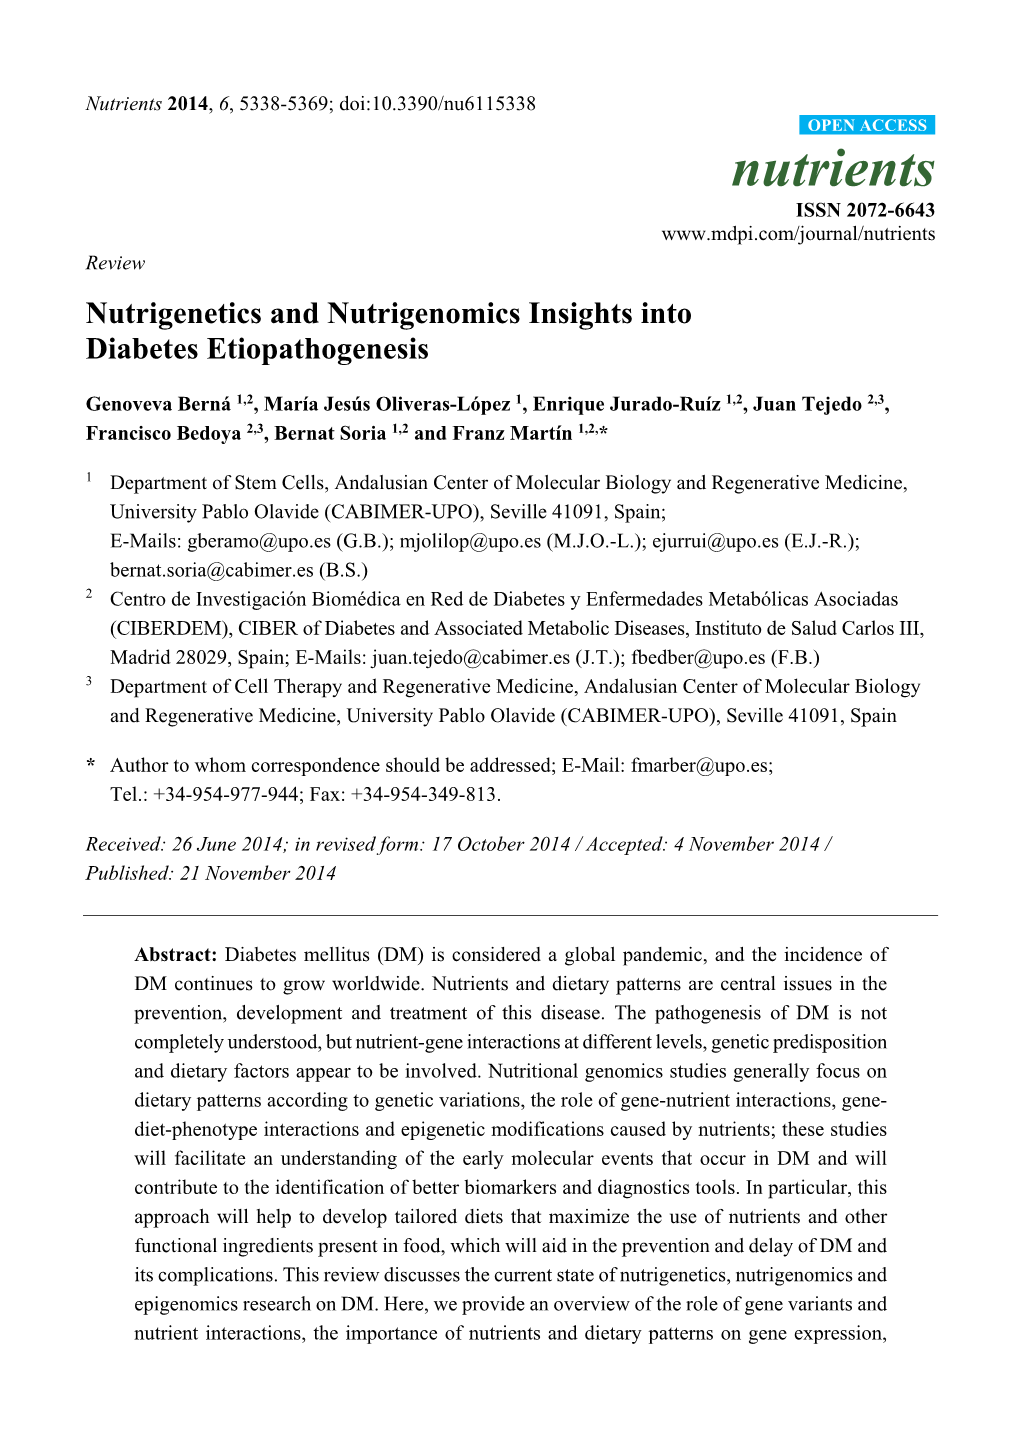 Nutrigenetics and Nutrigenomics Insights Into Diabetes Etiopathogenesis